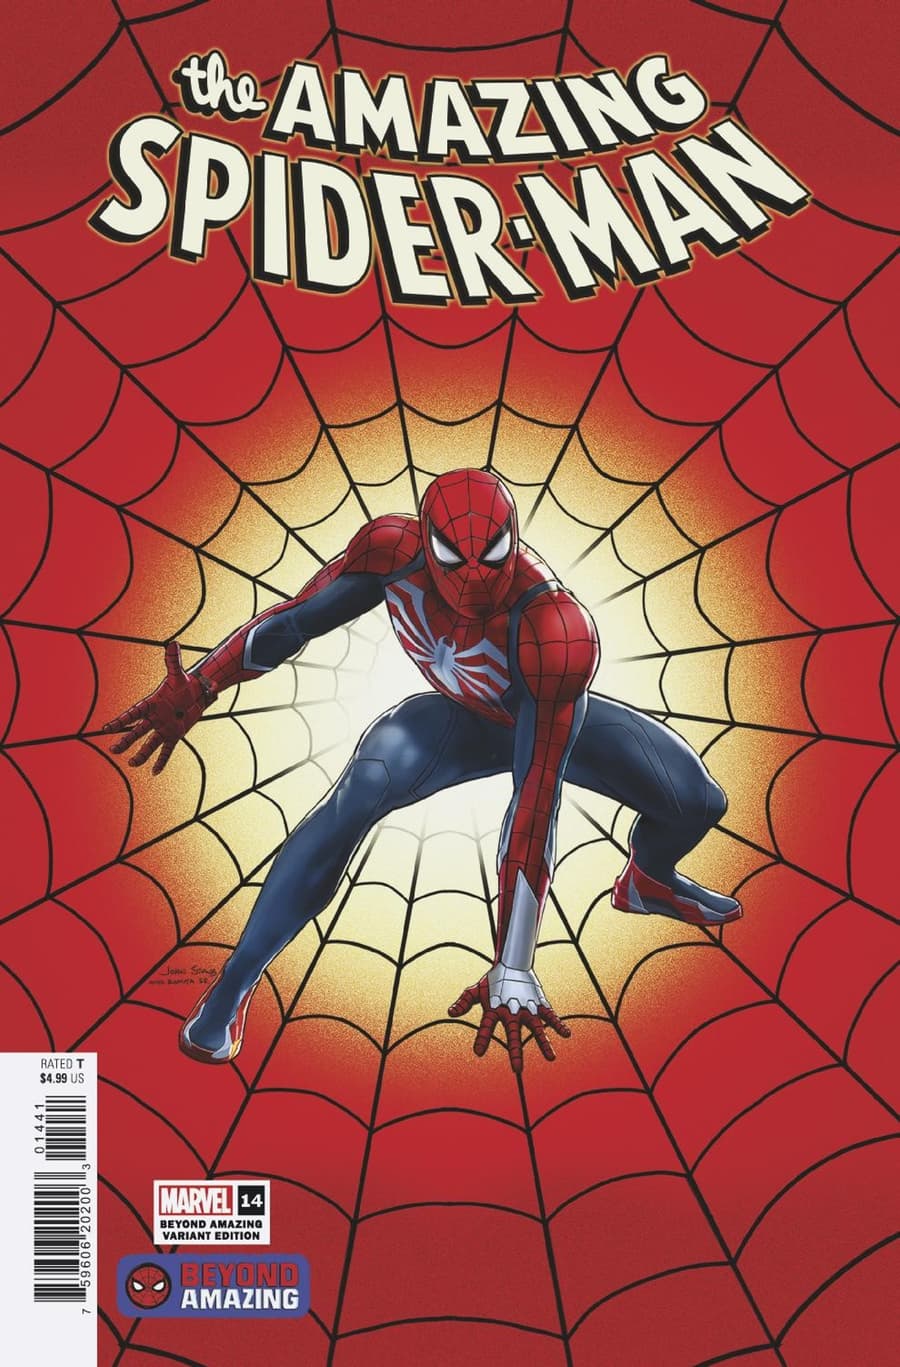 THE AMAZING SPIDER-MAN #14 Insomniac Beyond Amazing Variant Cover by John Staub